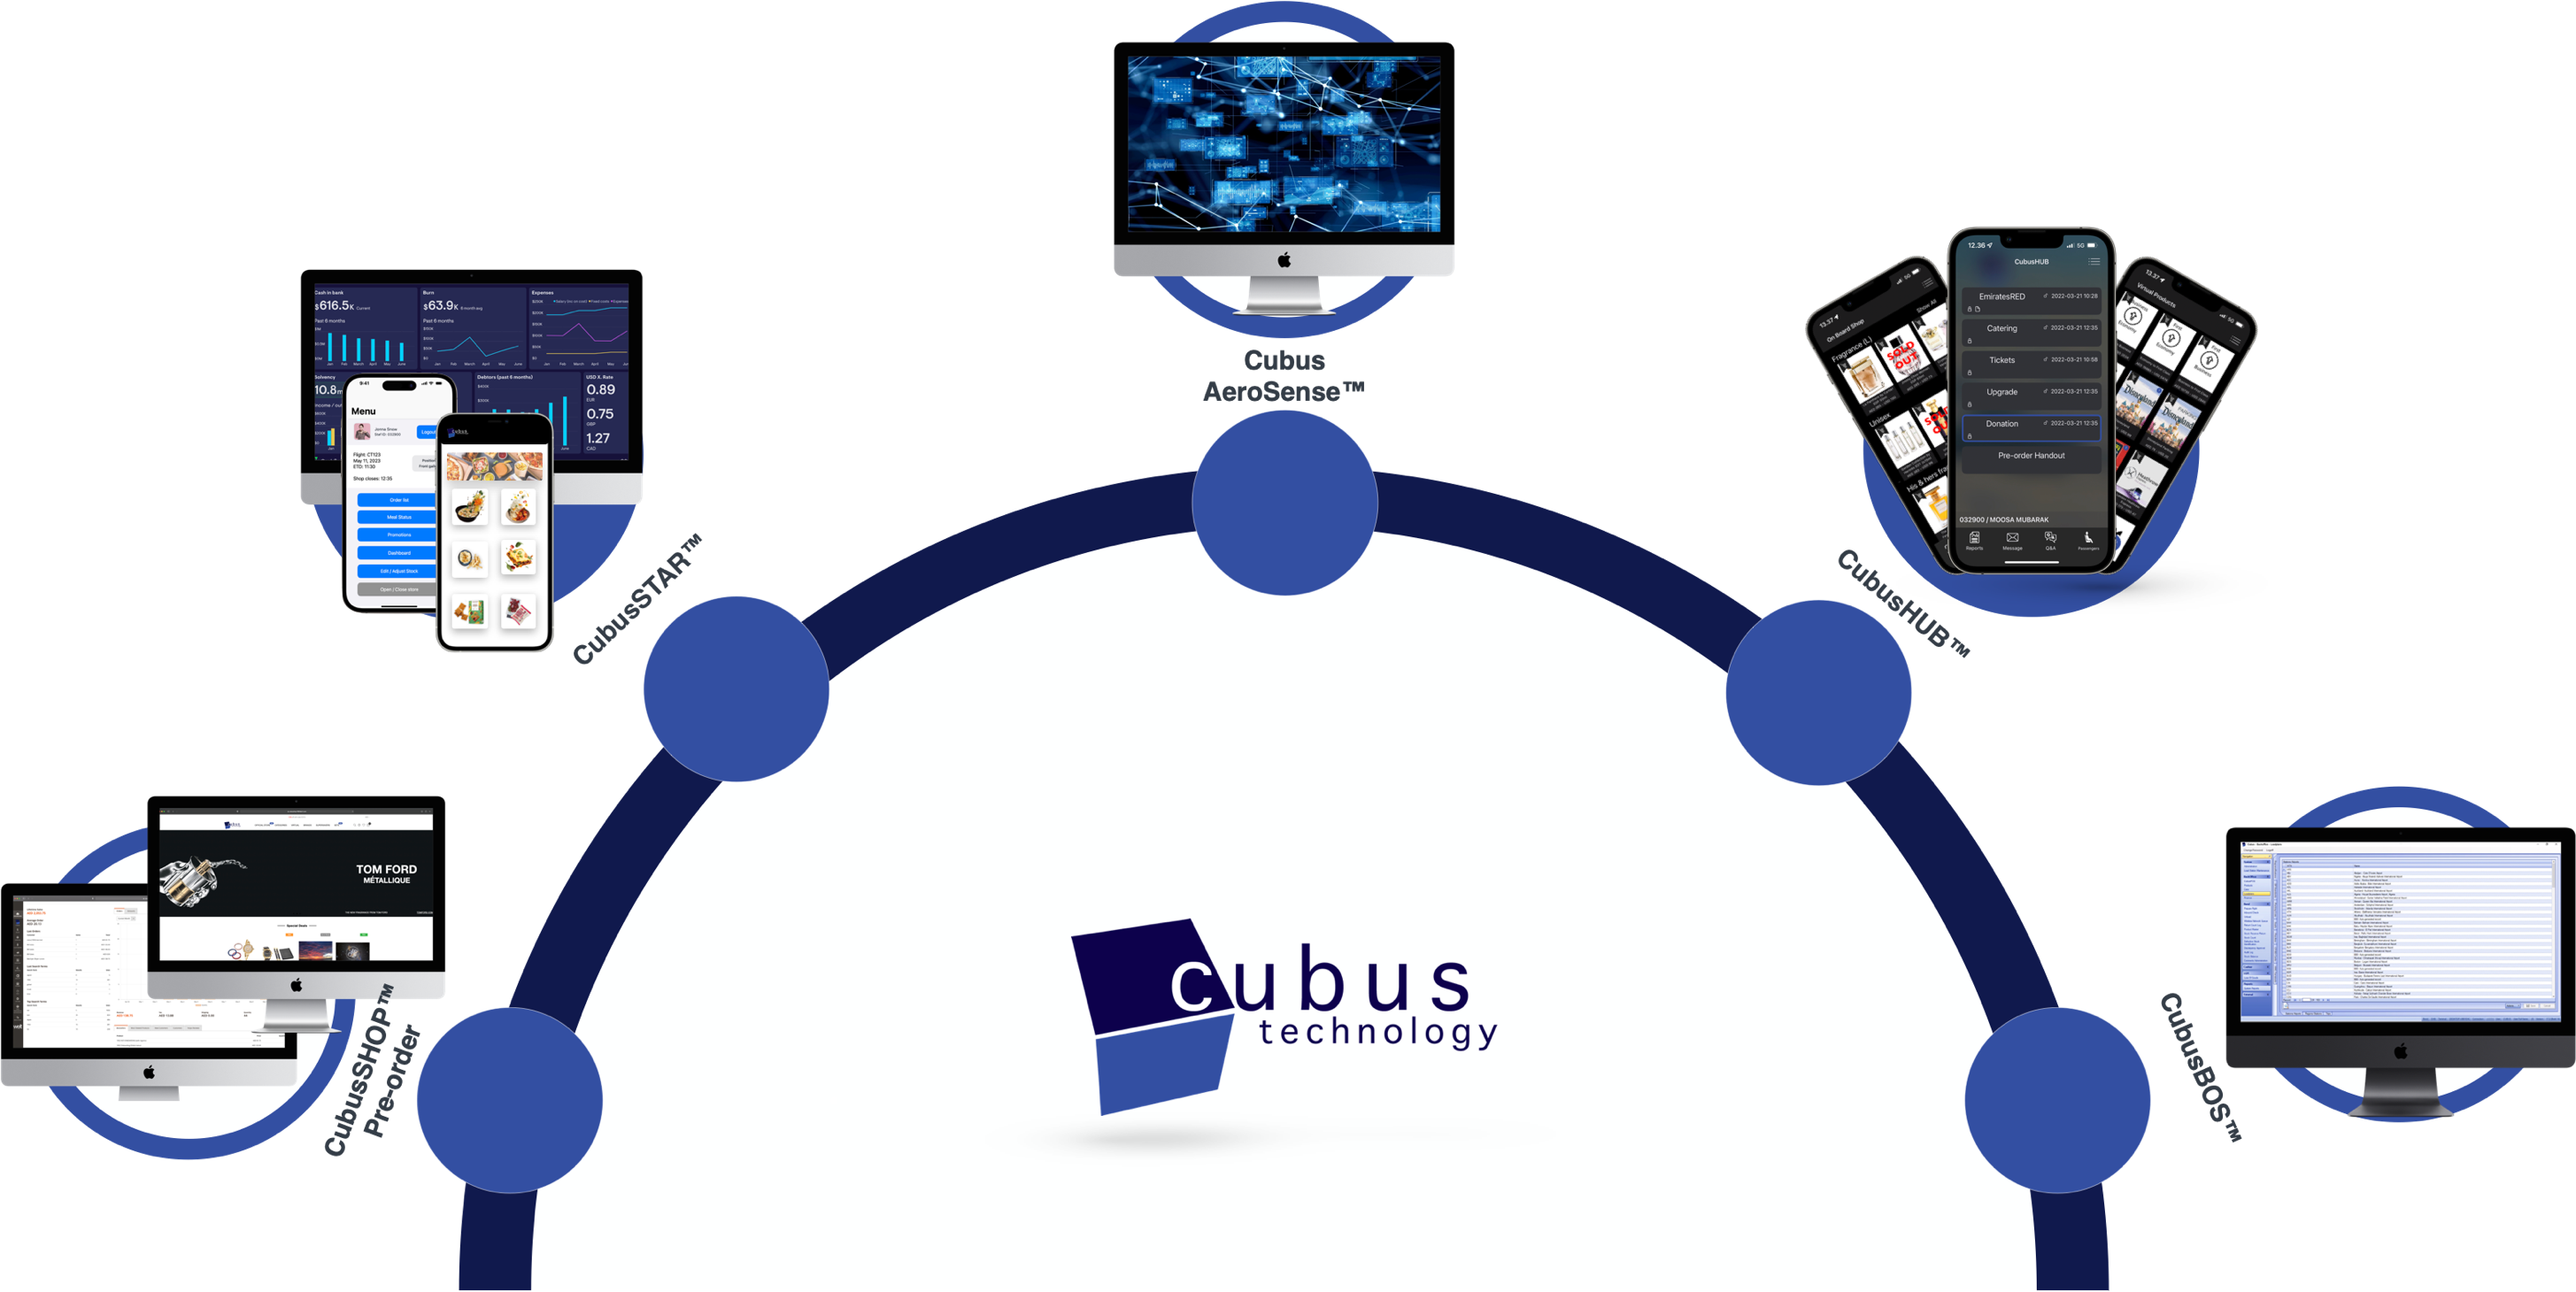 Cubus Technology product suite